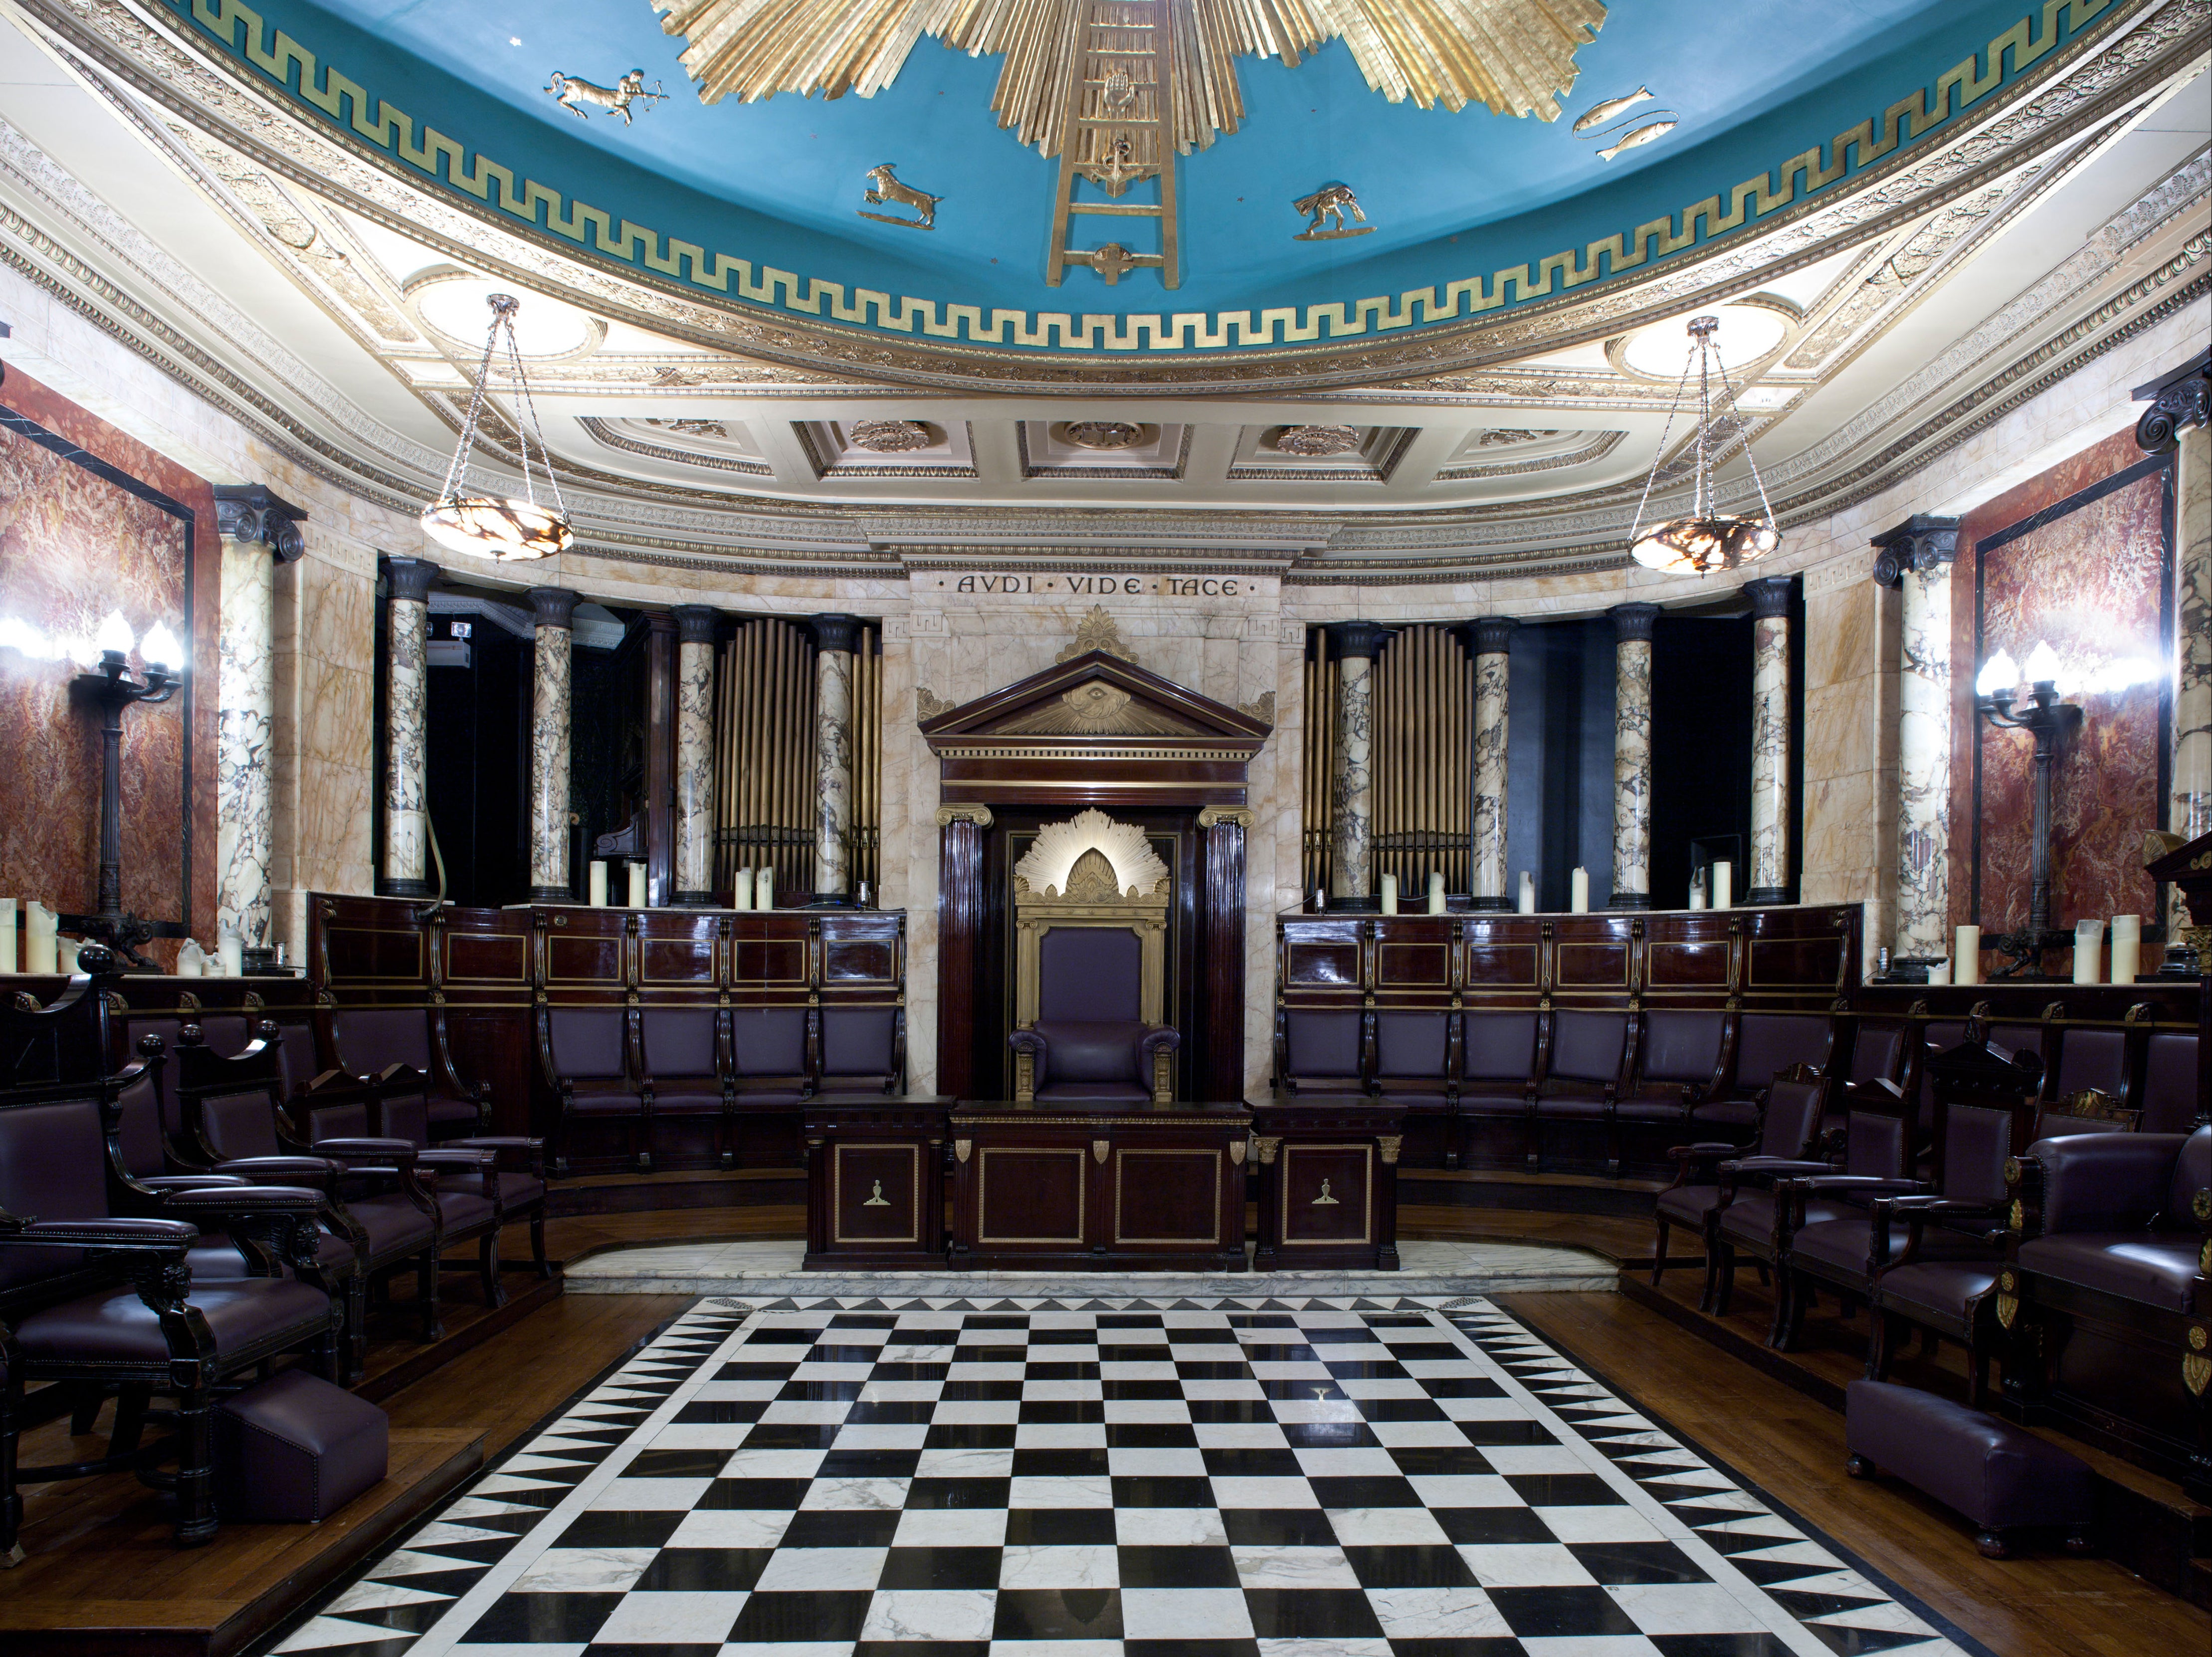 The hidden Masonic Temple inside Andaz hotel at Liverpool Street